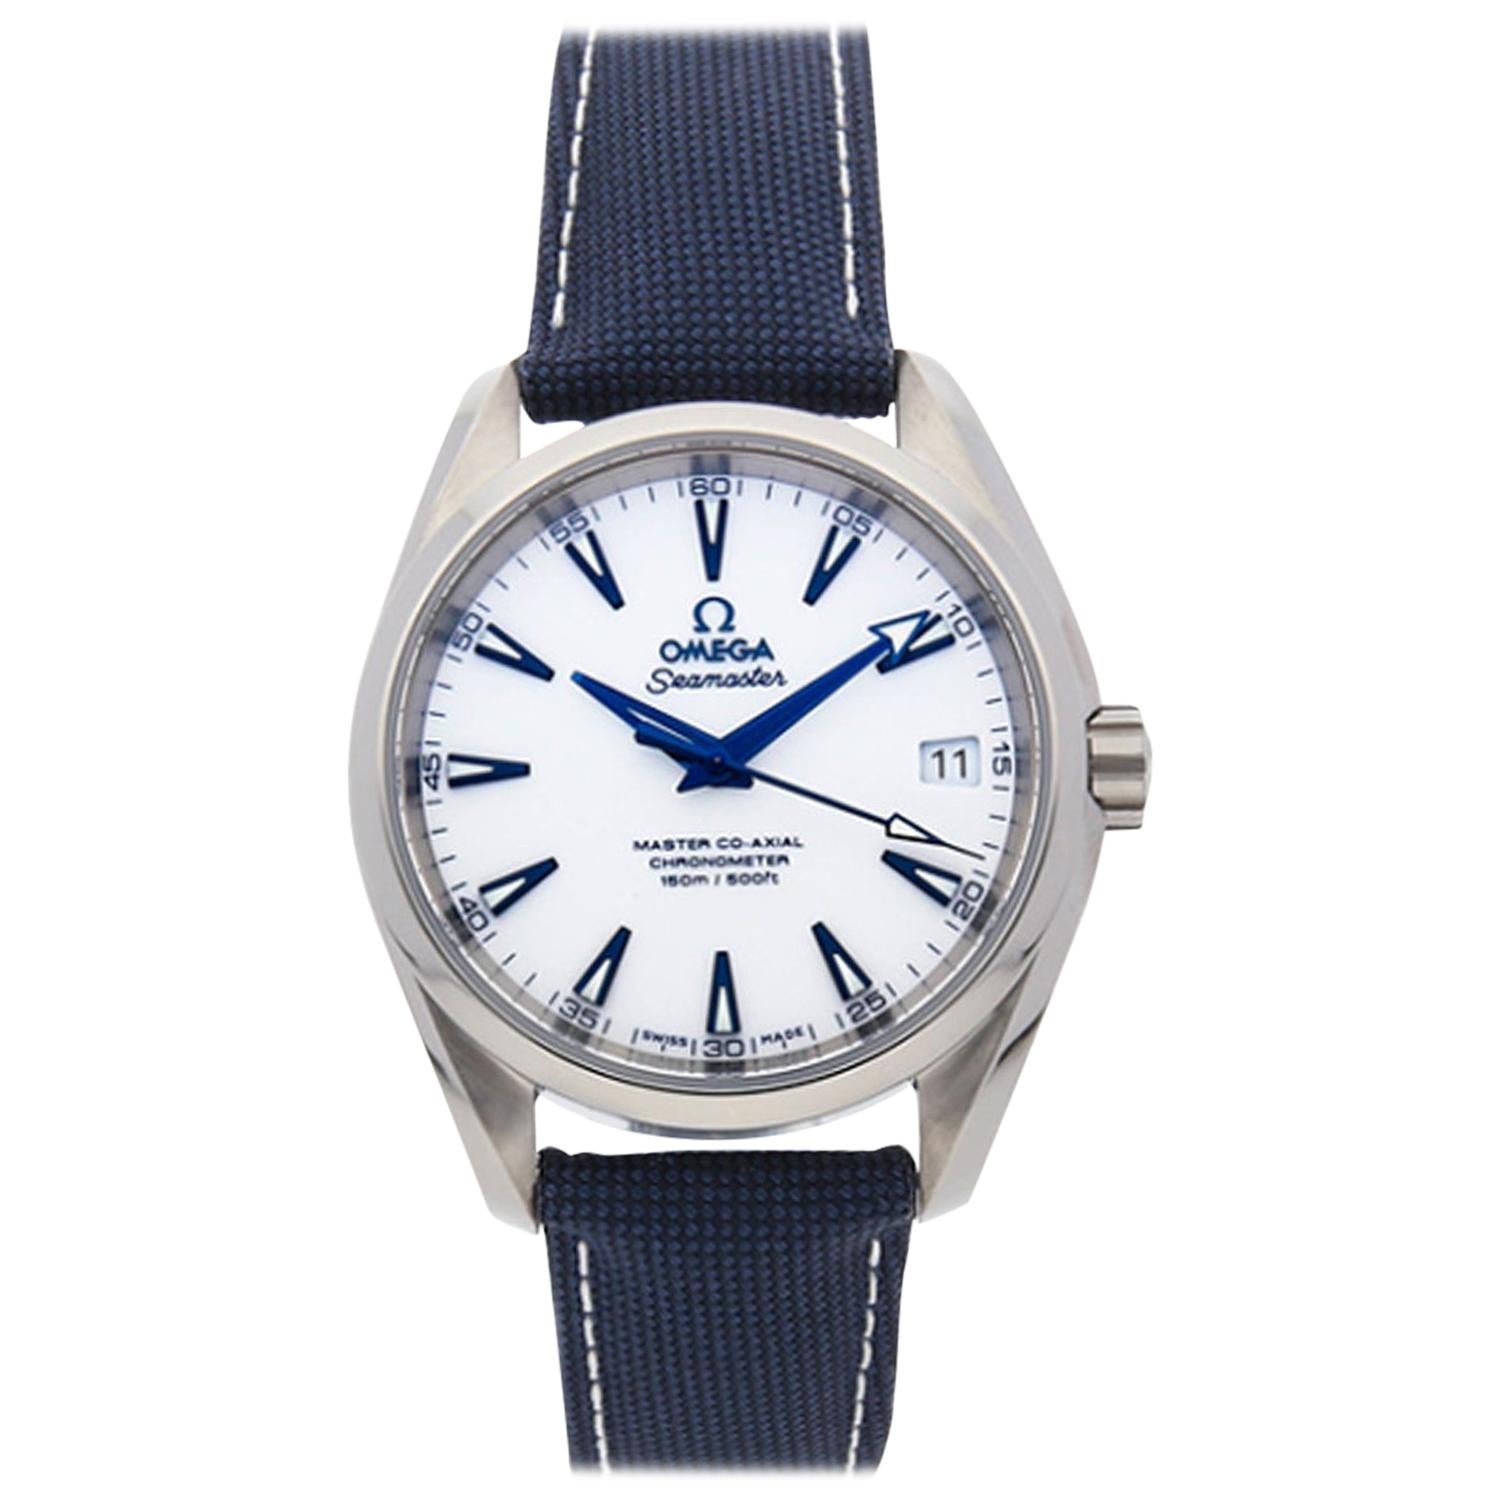 Omega Seamaster Aqua Terra Titanium White Dial Men's Watch 231.92.39.21.04.001